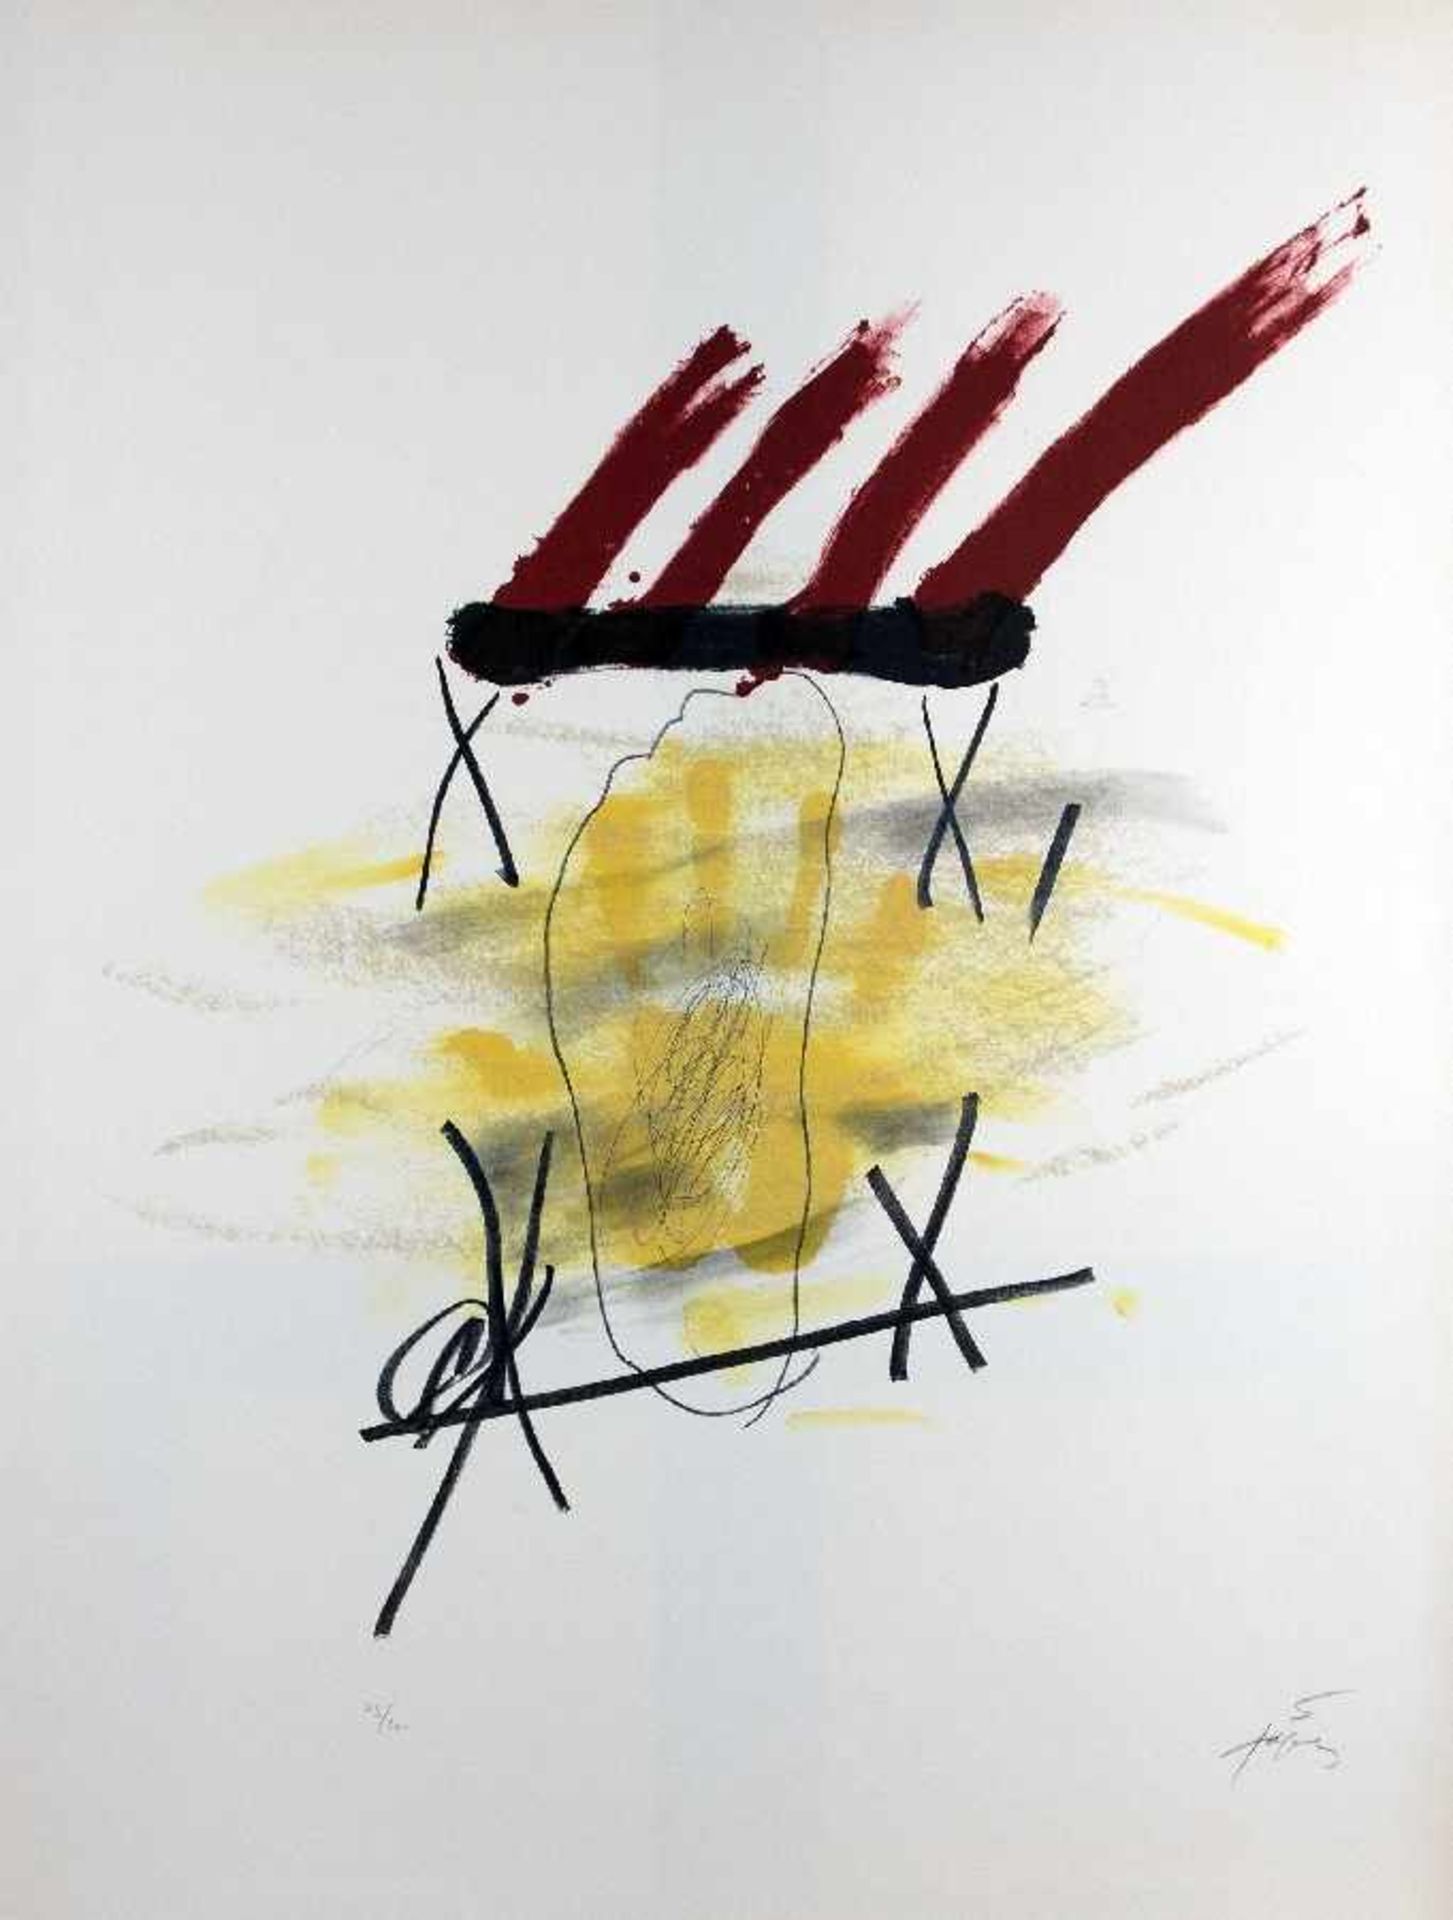 Antoni Tapies1923 Barcelona - 2012La main jauneColor lithograph on paper; H 530 mm, W 470 mm; signed